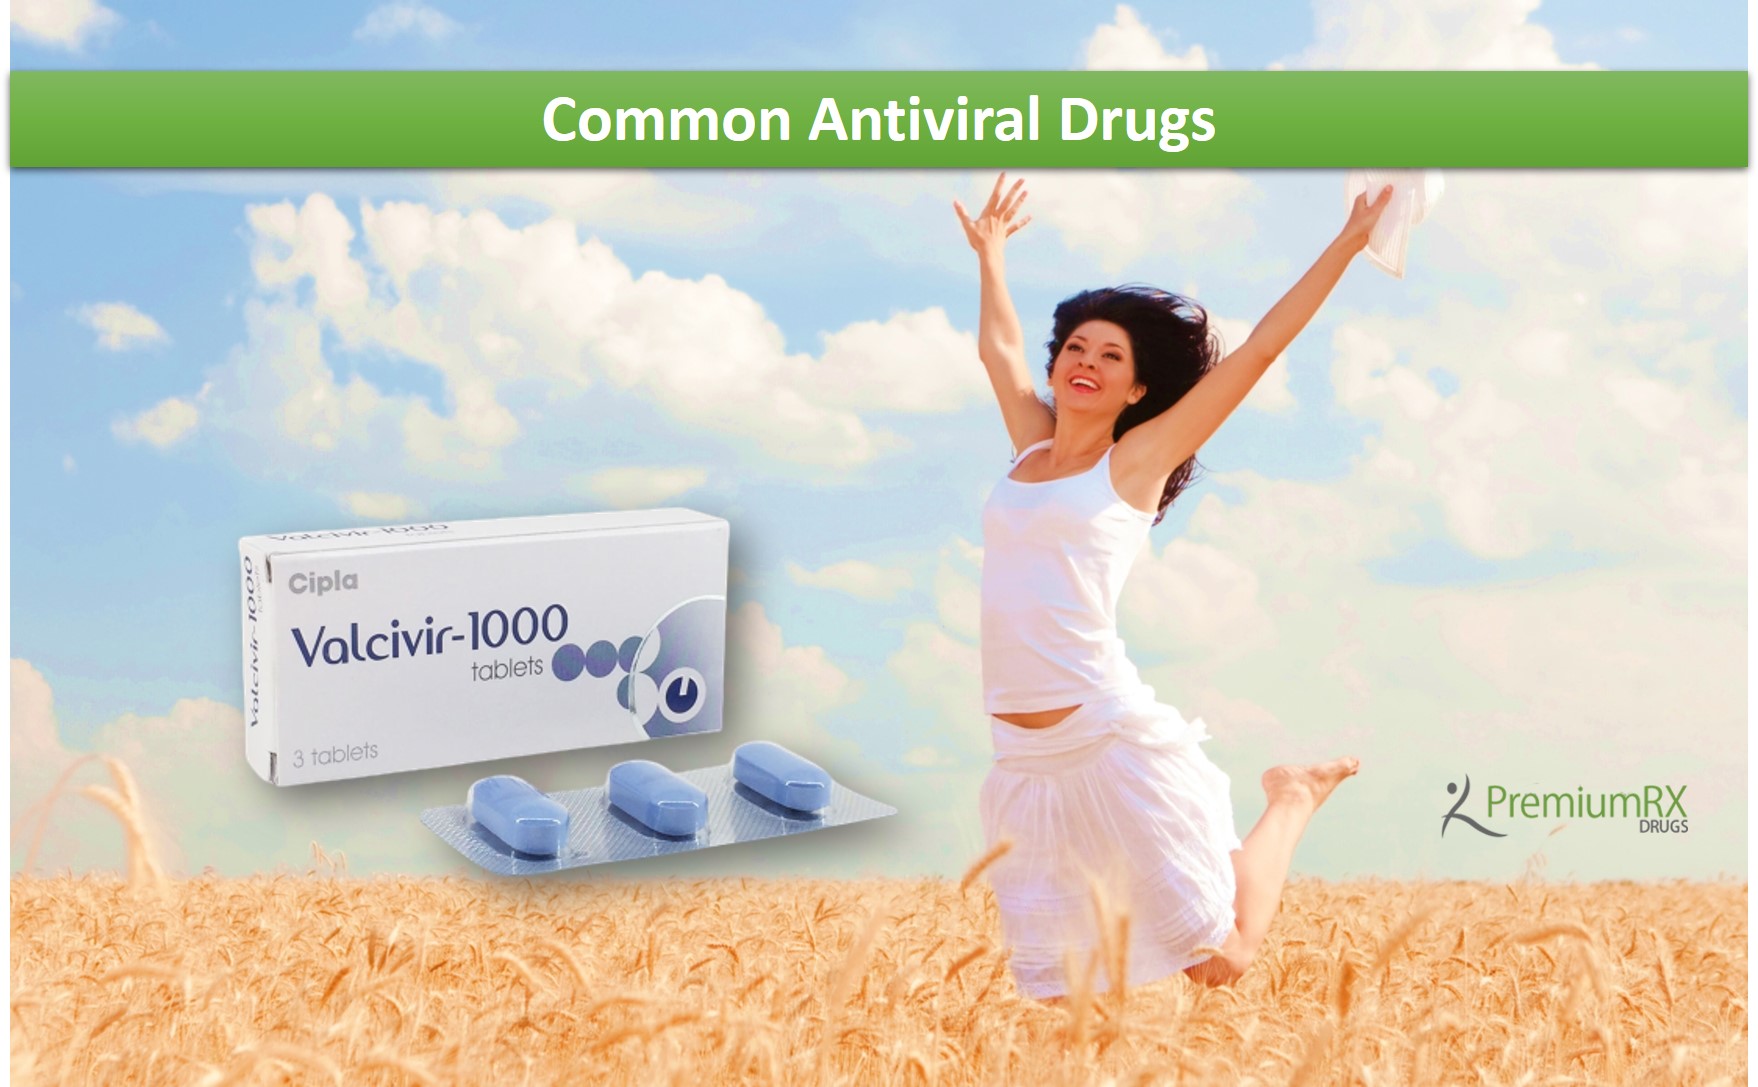 Common Antiviral Drugs